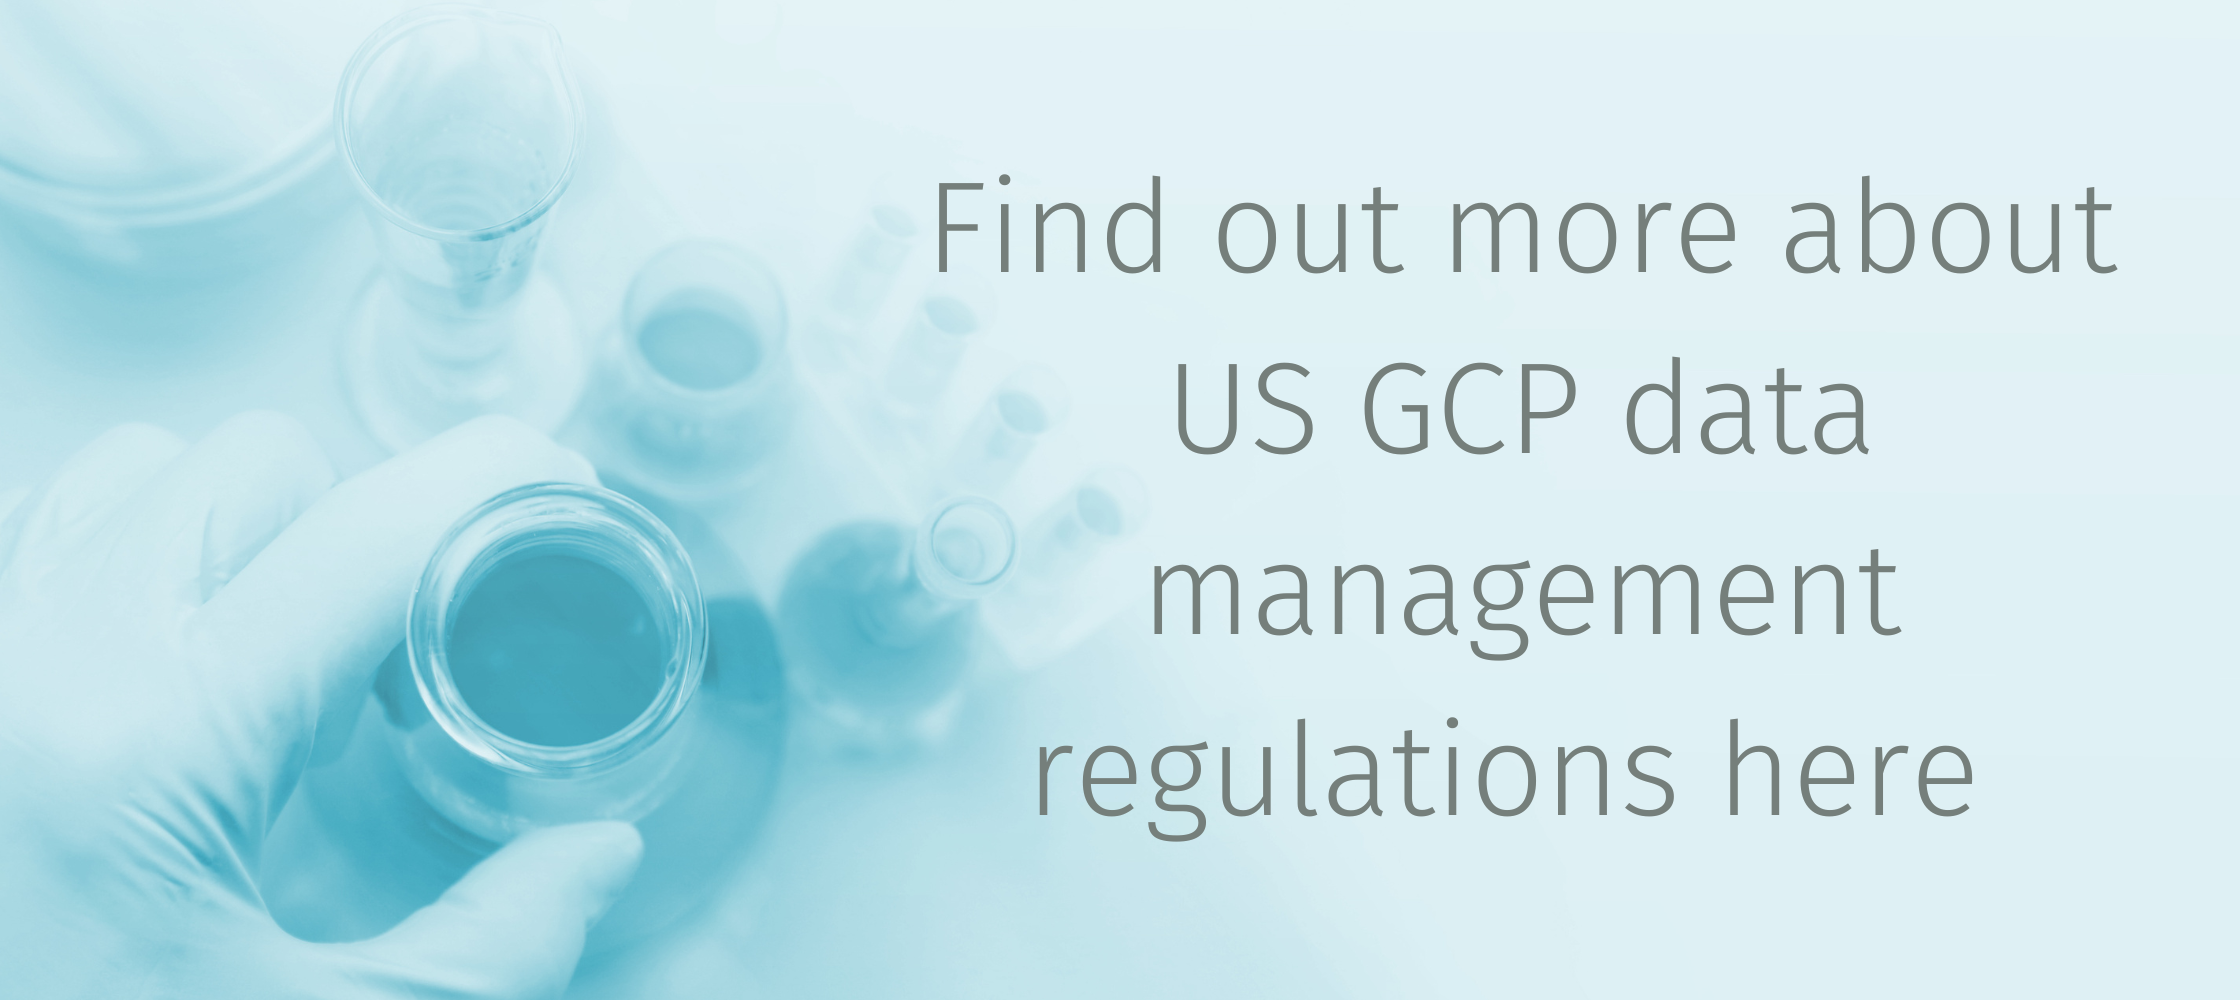 US GCP data management regulations